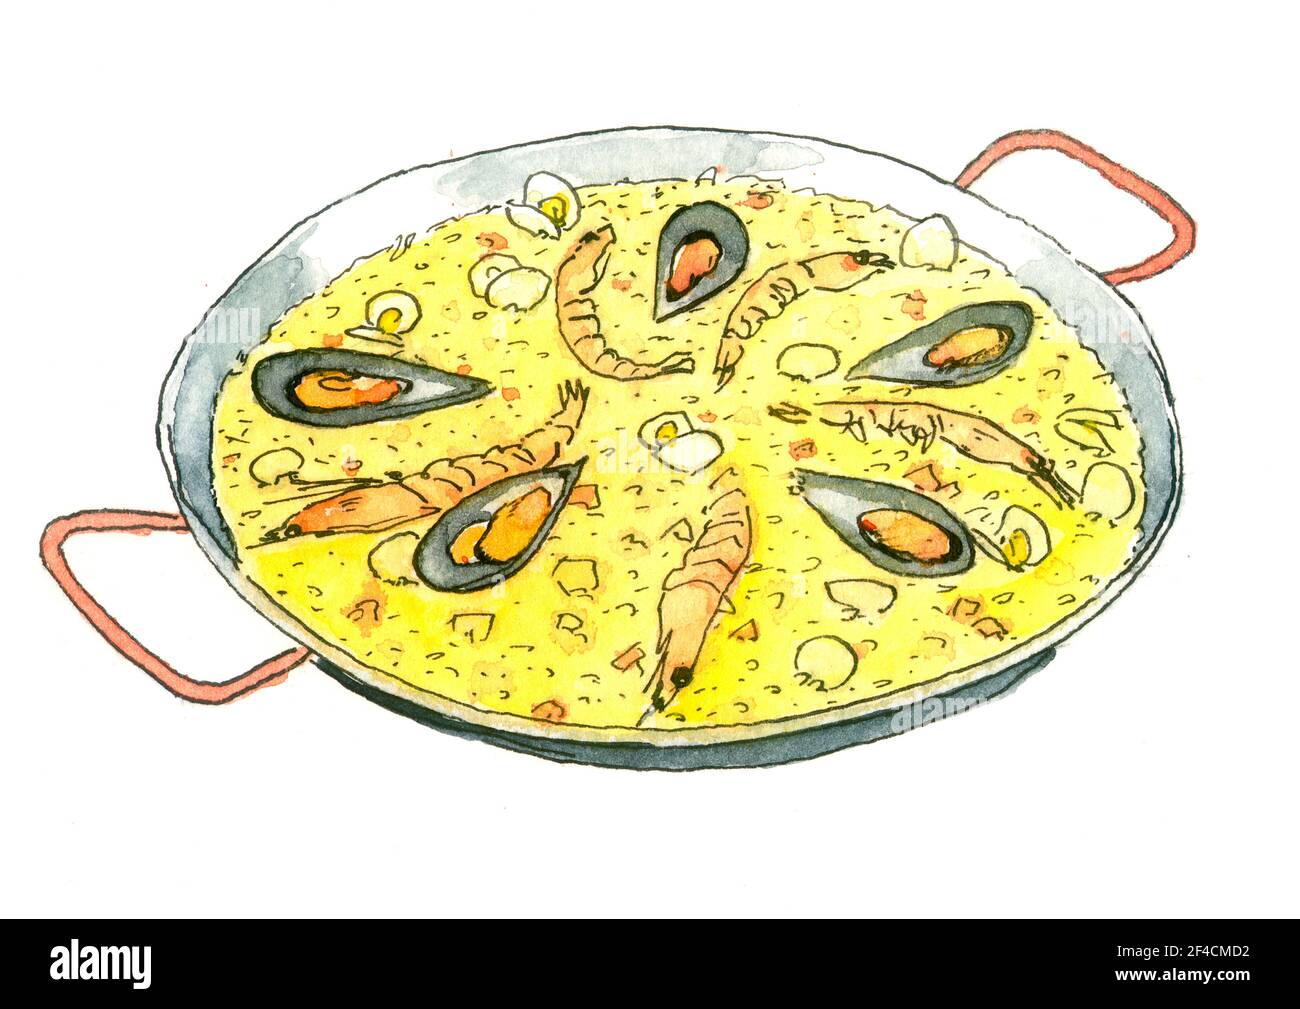 Paella illustration. Spanish rice, paella with seafood. Watercolor